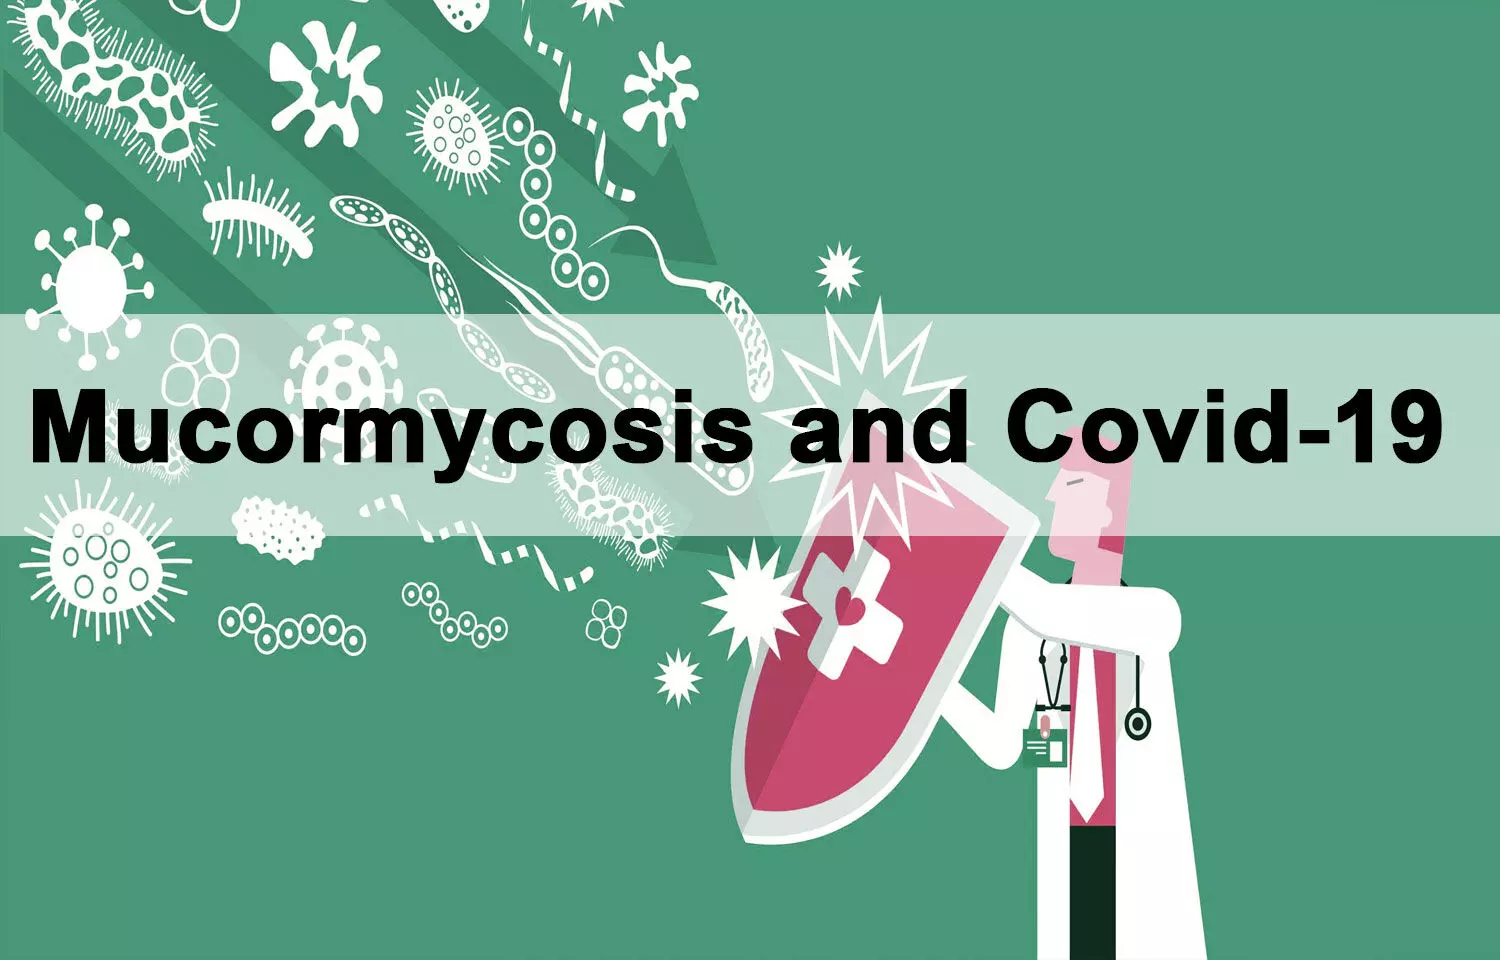 Dermatological manifestations of mucormycosis during COVID-19 : IDOJ